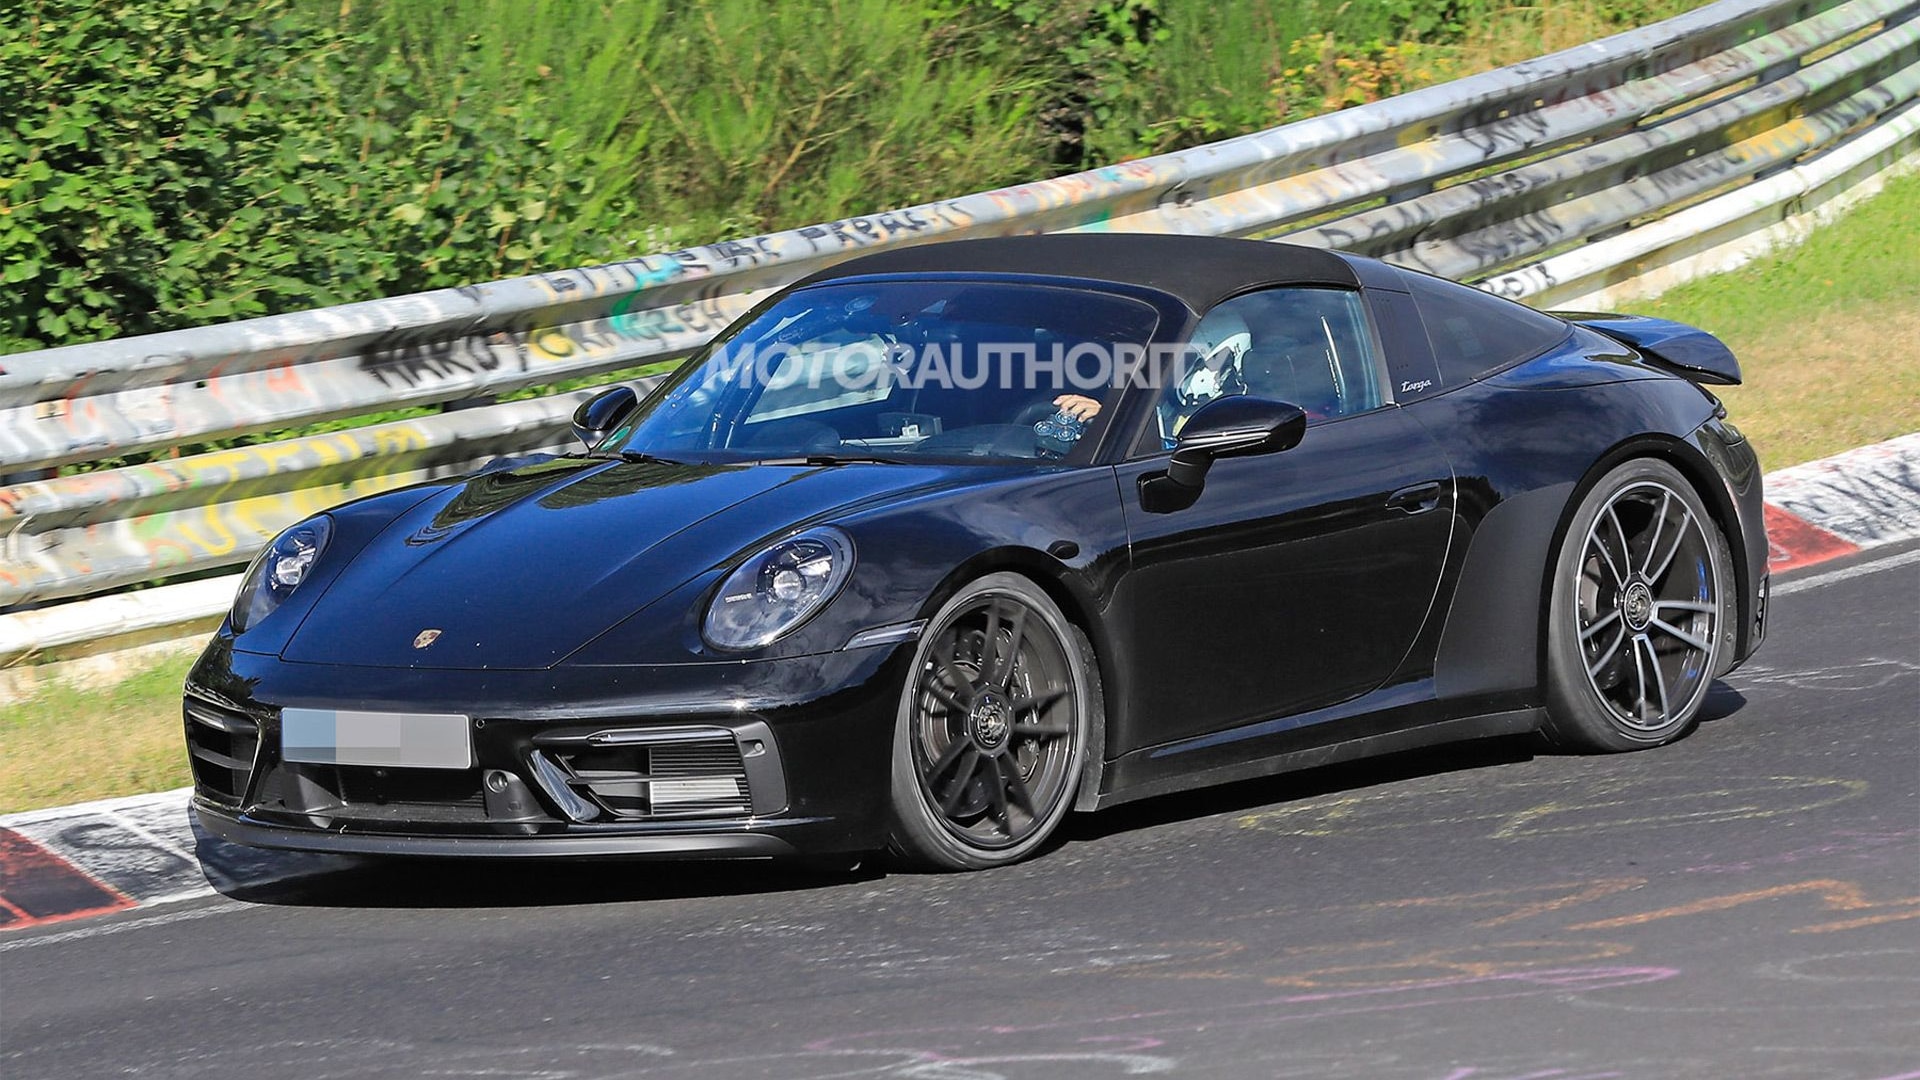 2021 Porsche 911 Targa 4 GTS spy shots - Photo credit: S. Baldauf/SB-Medien